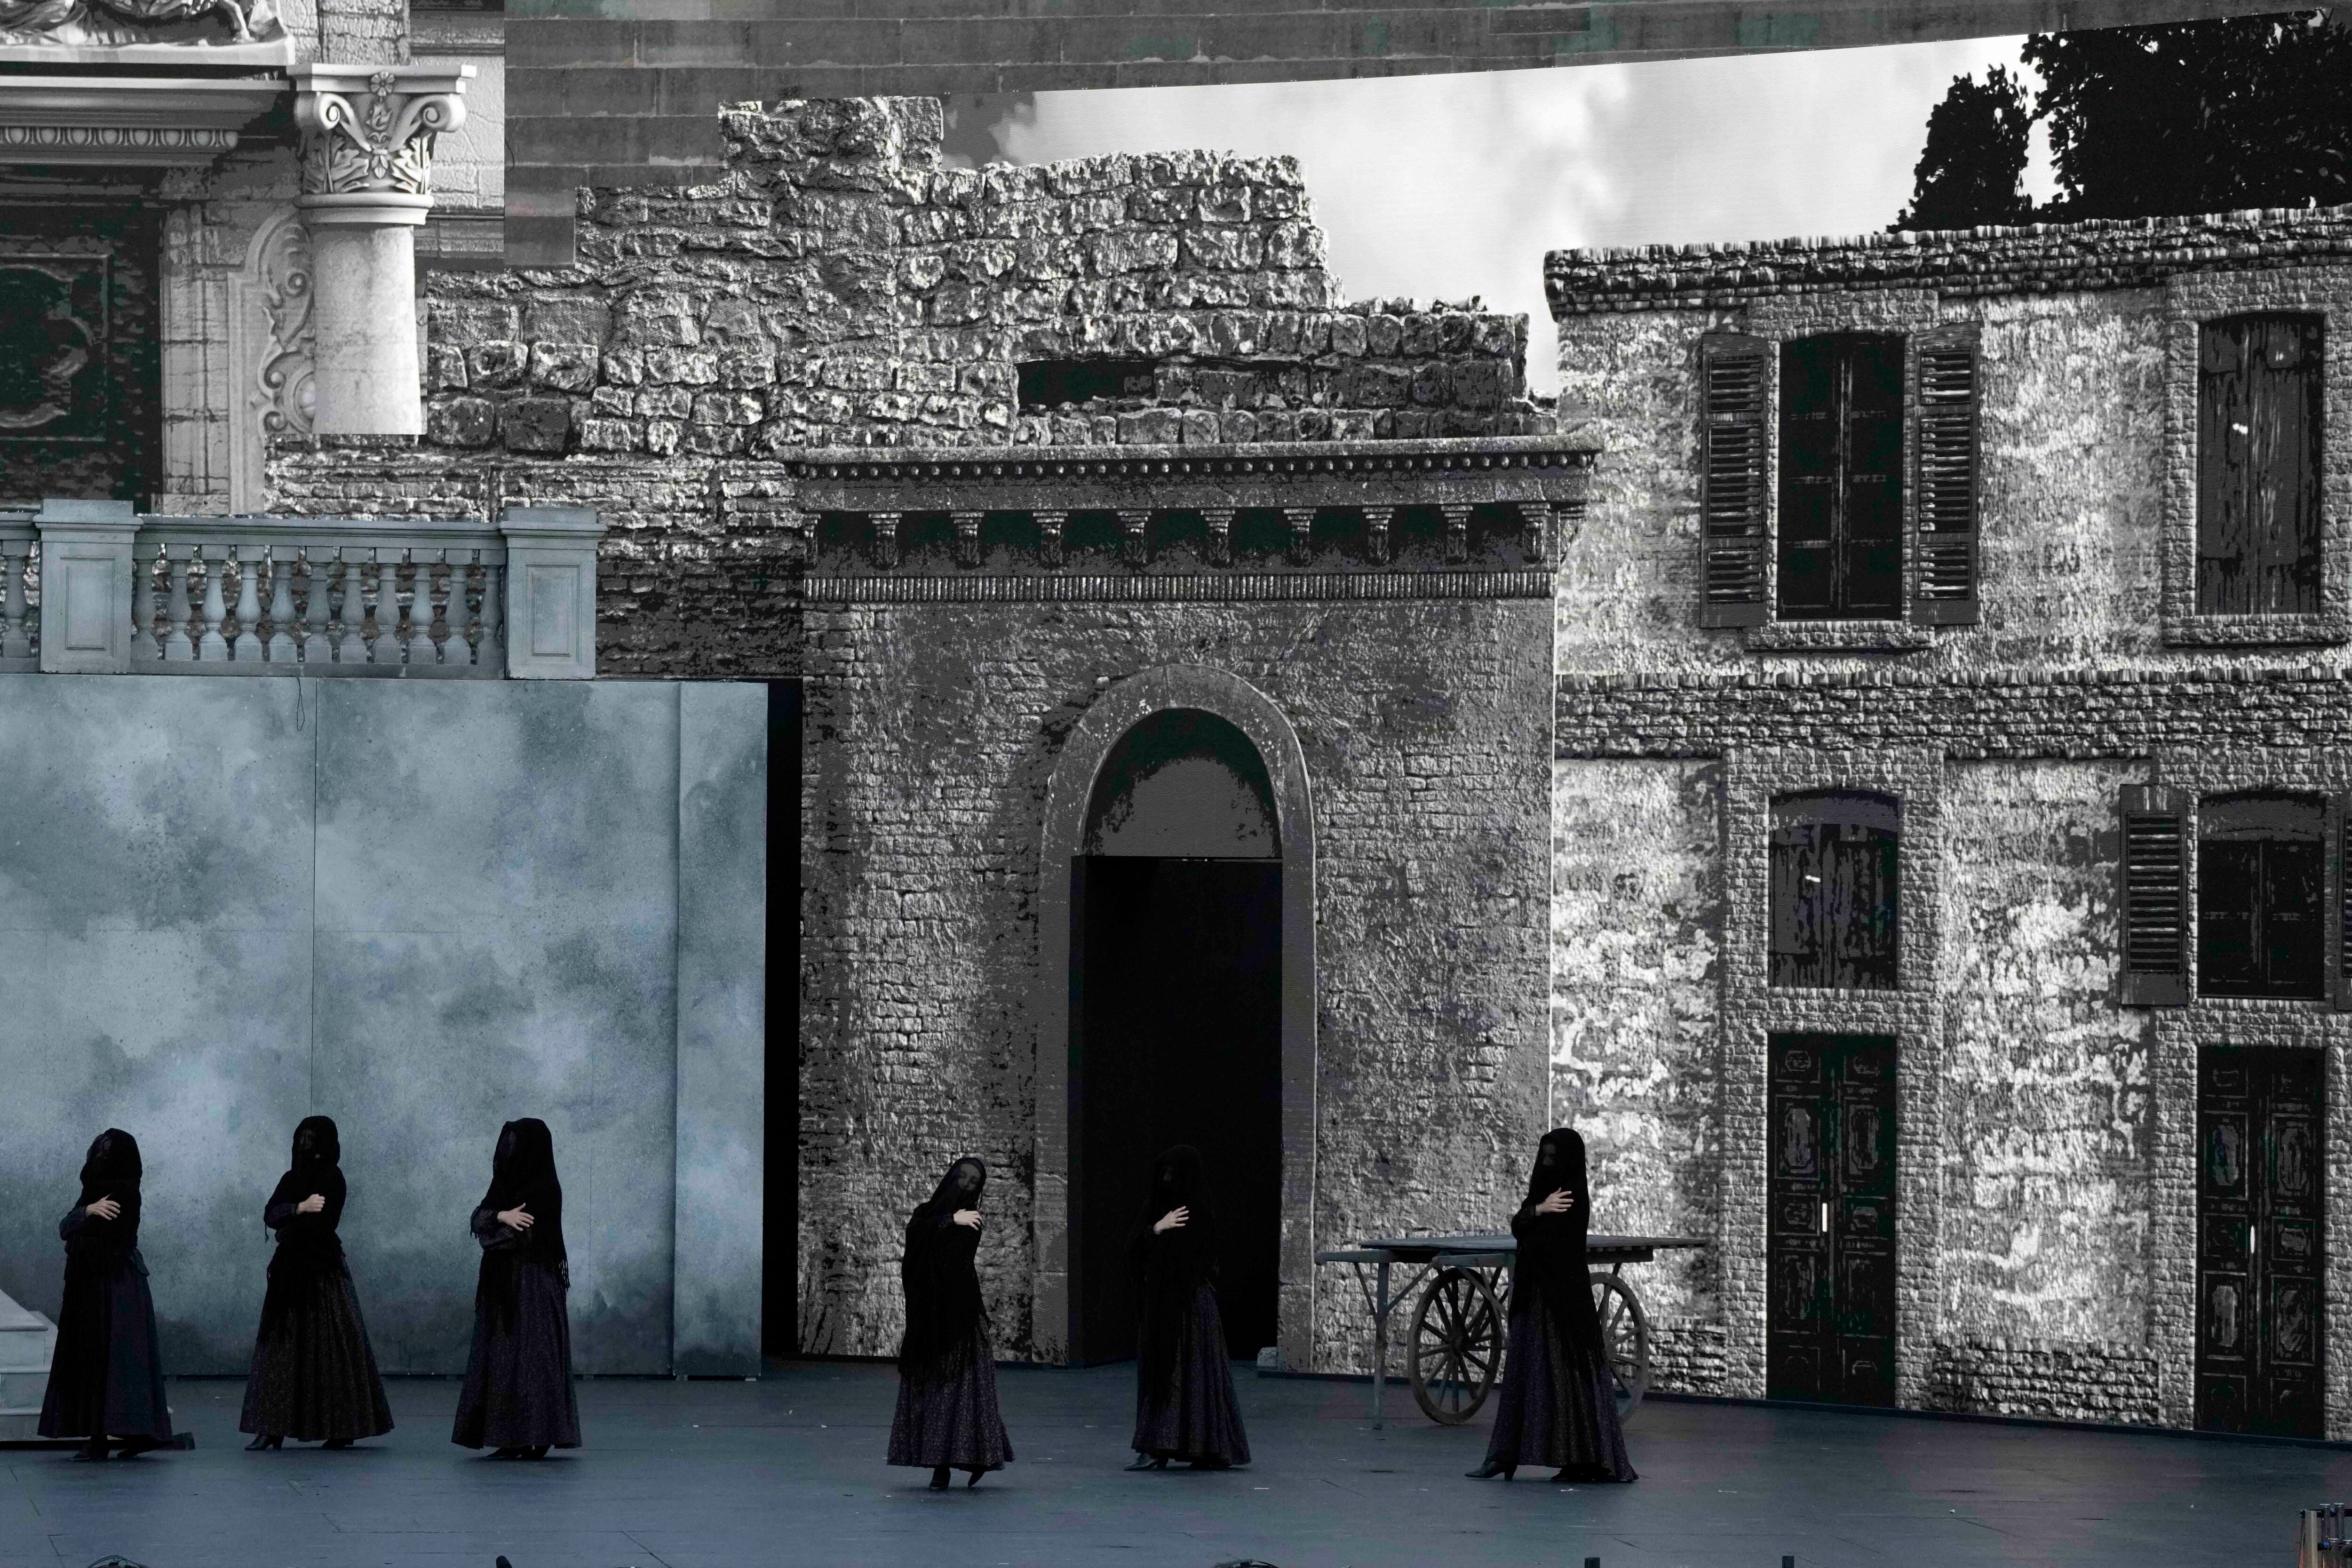 3D video replaces huge sets in Verona as full operas resume